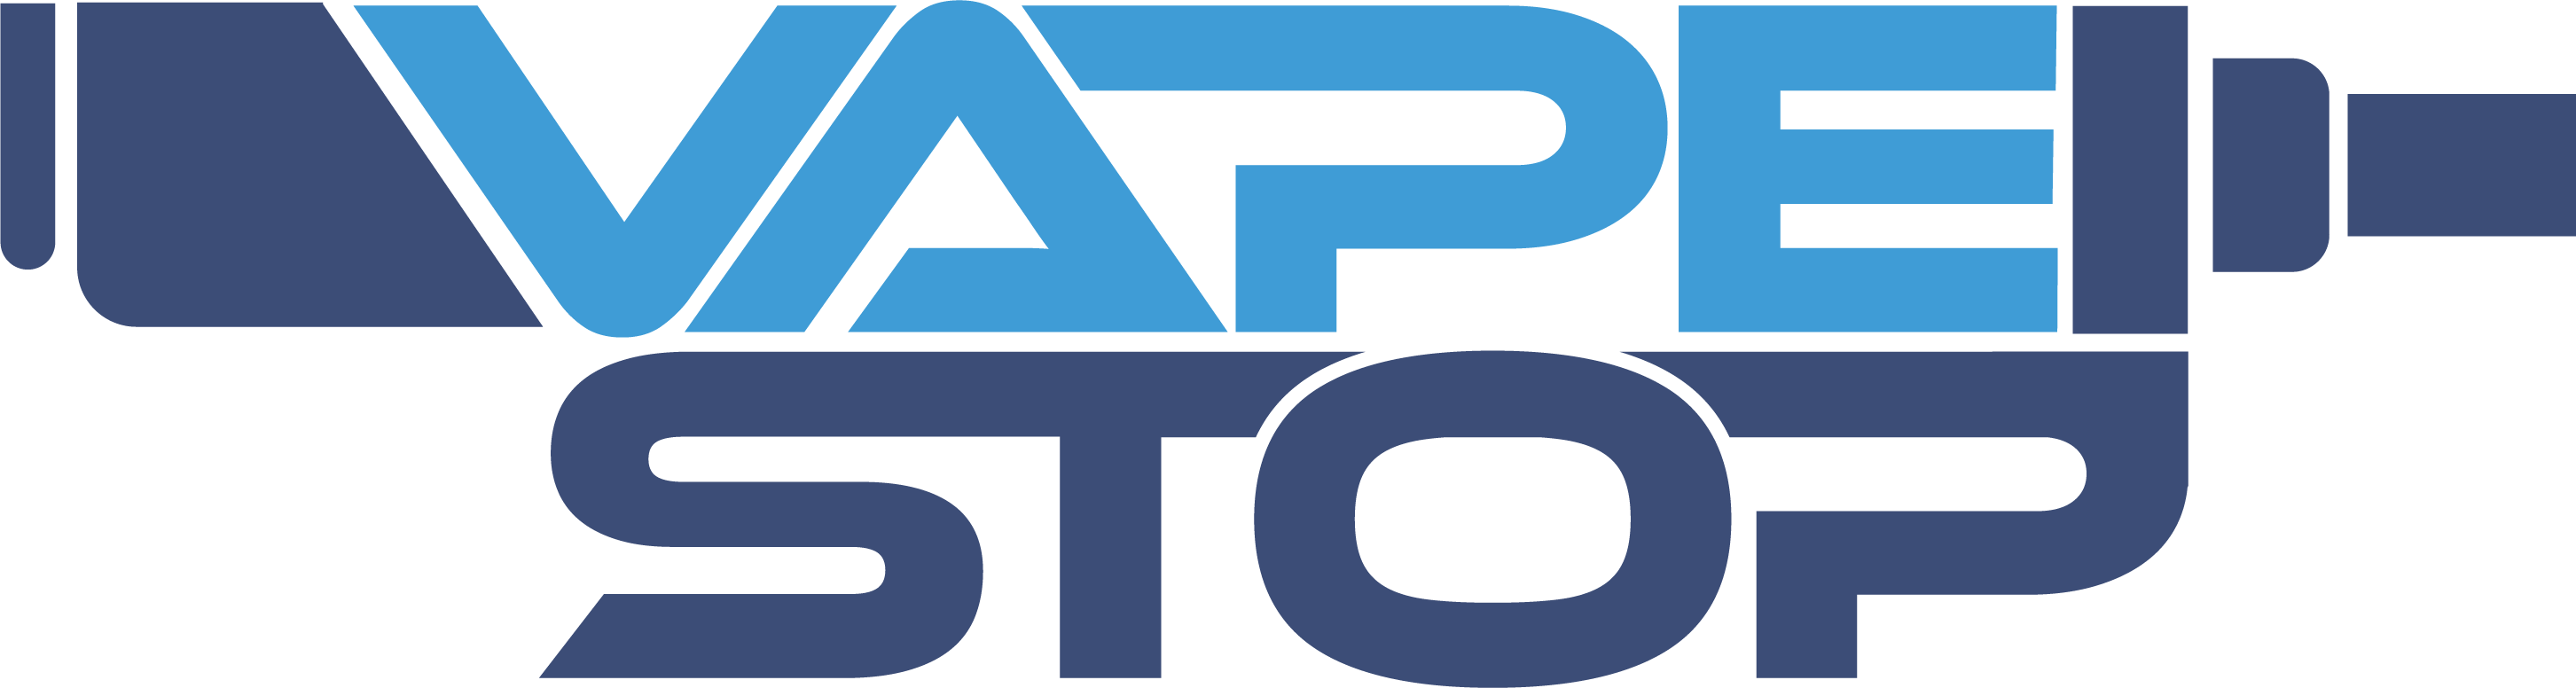 Vape Logo Png - Vape Logo (2905x776), Png Download